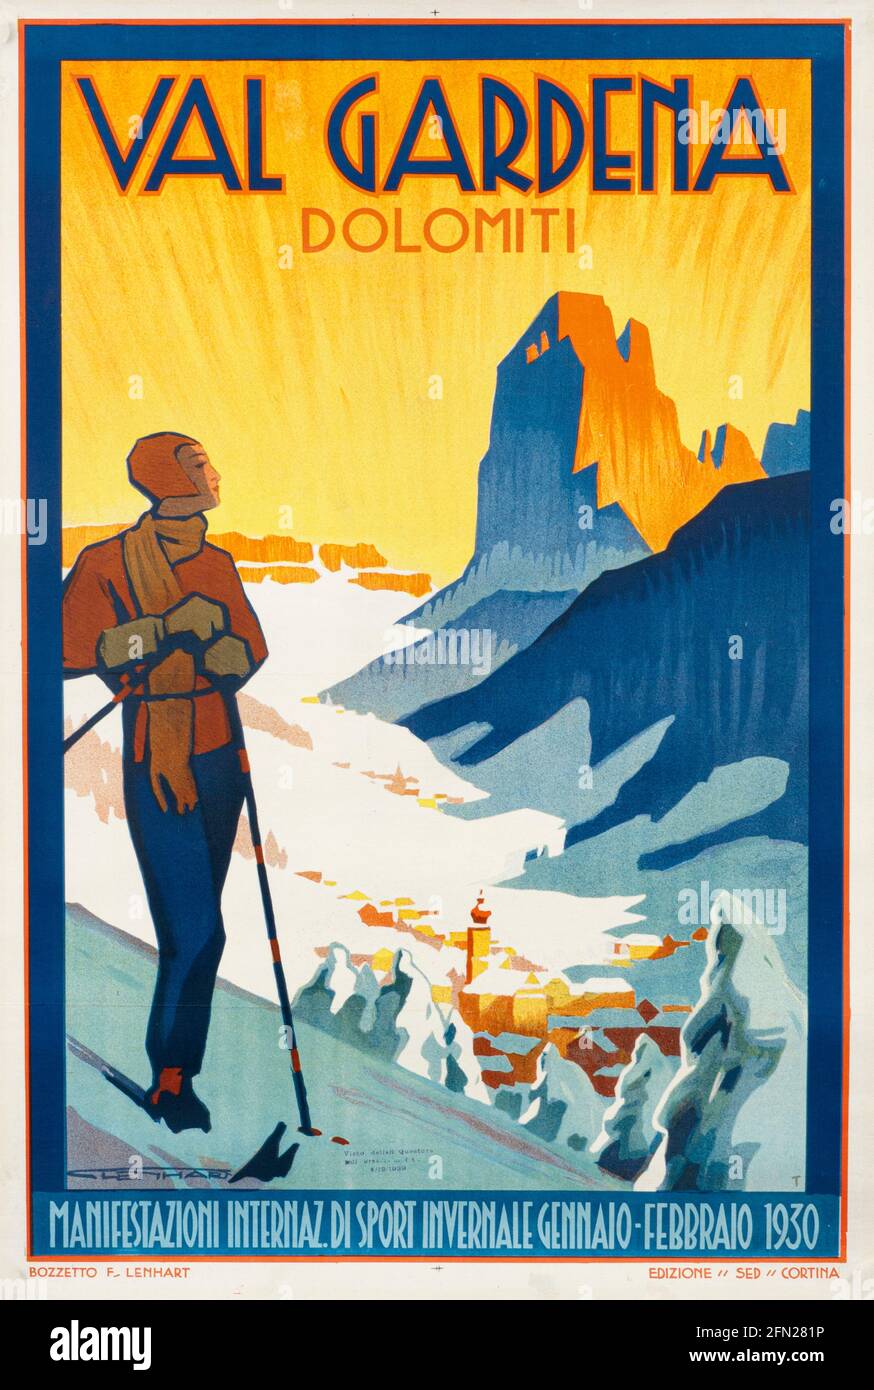 Val Gardena Dolomiti 1930 Vintage lithograph travel poster Stock Photo